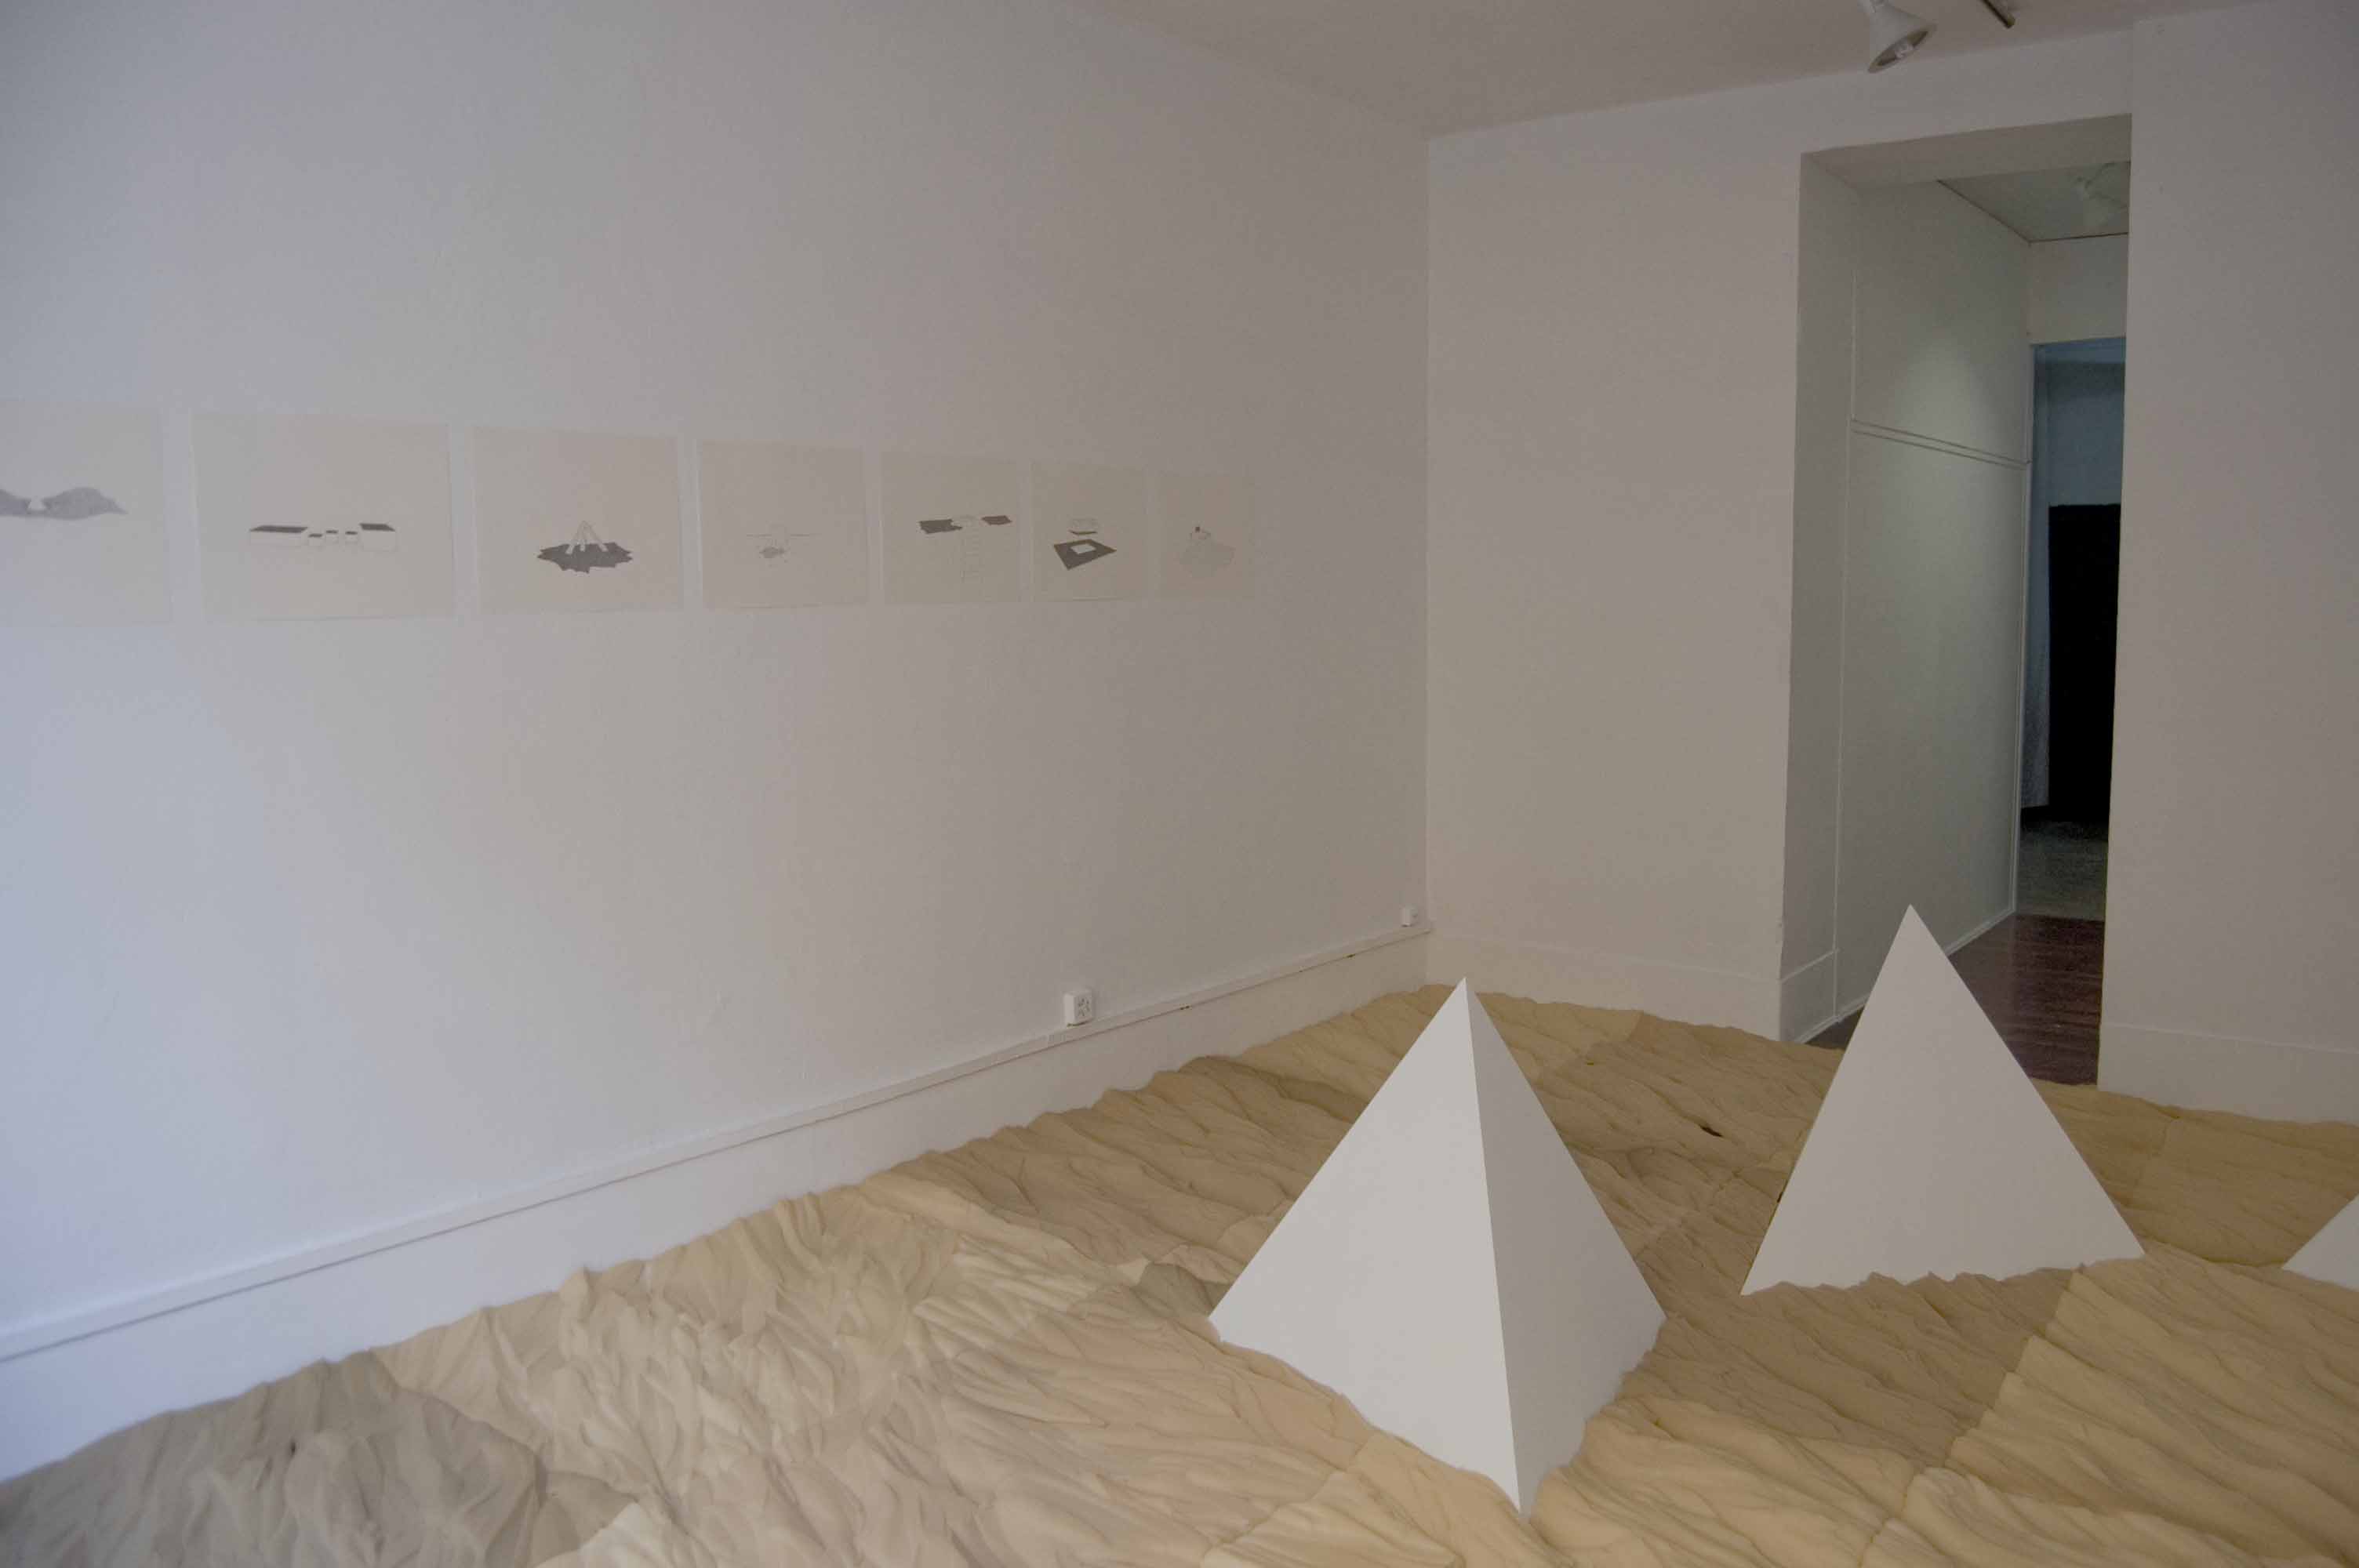 mickael lianza flatland piano nobile dessin drawing sculpture installation geneva art contemporain